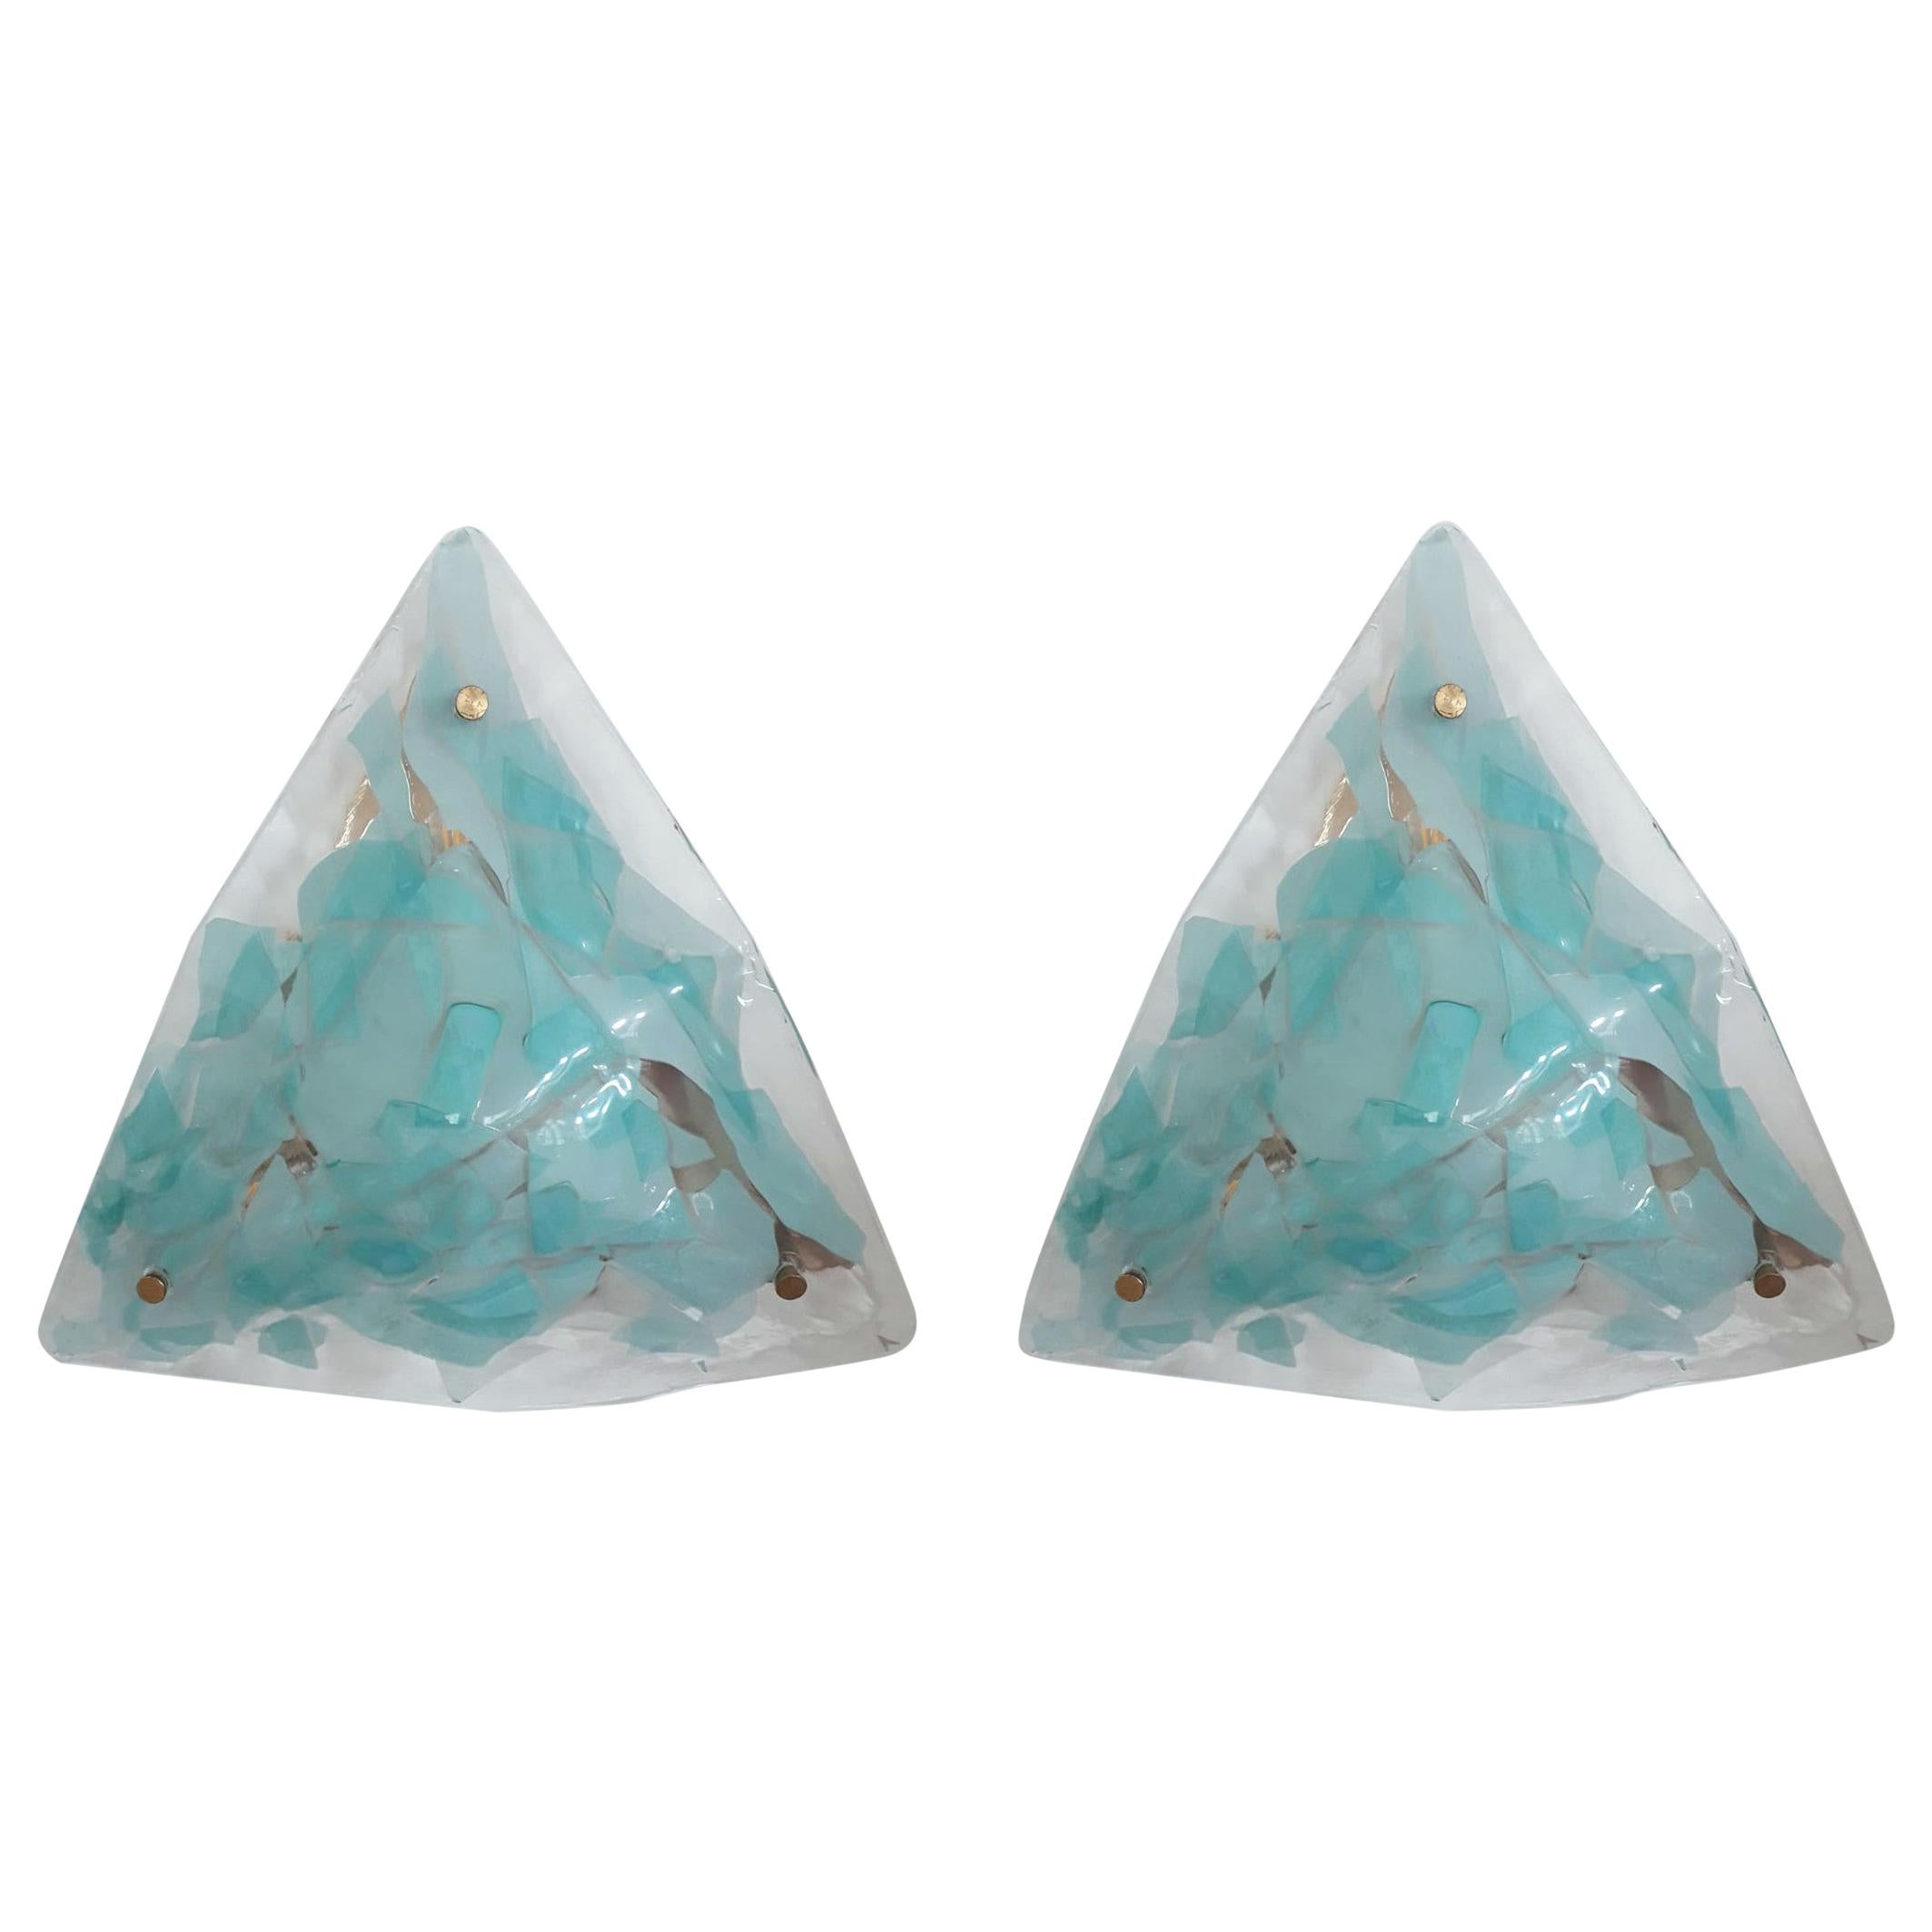 Pair of Triangular Sconces by La Murrina